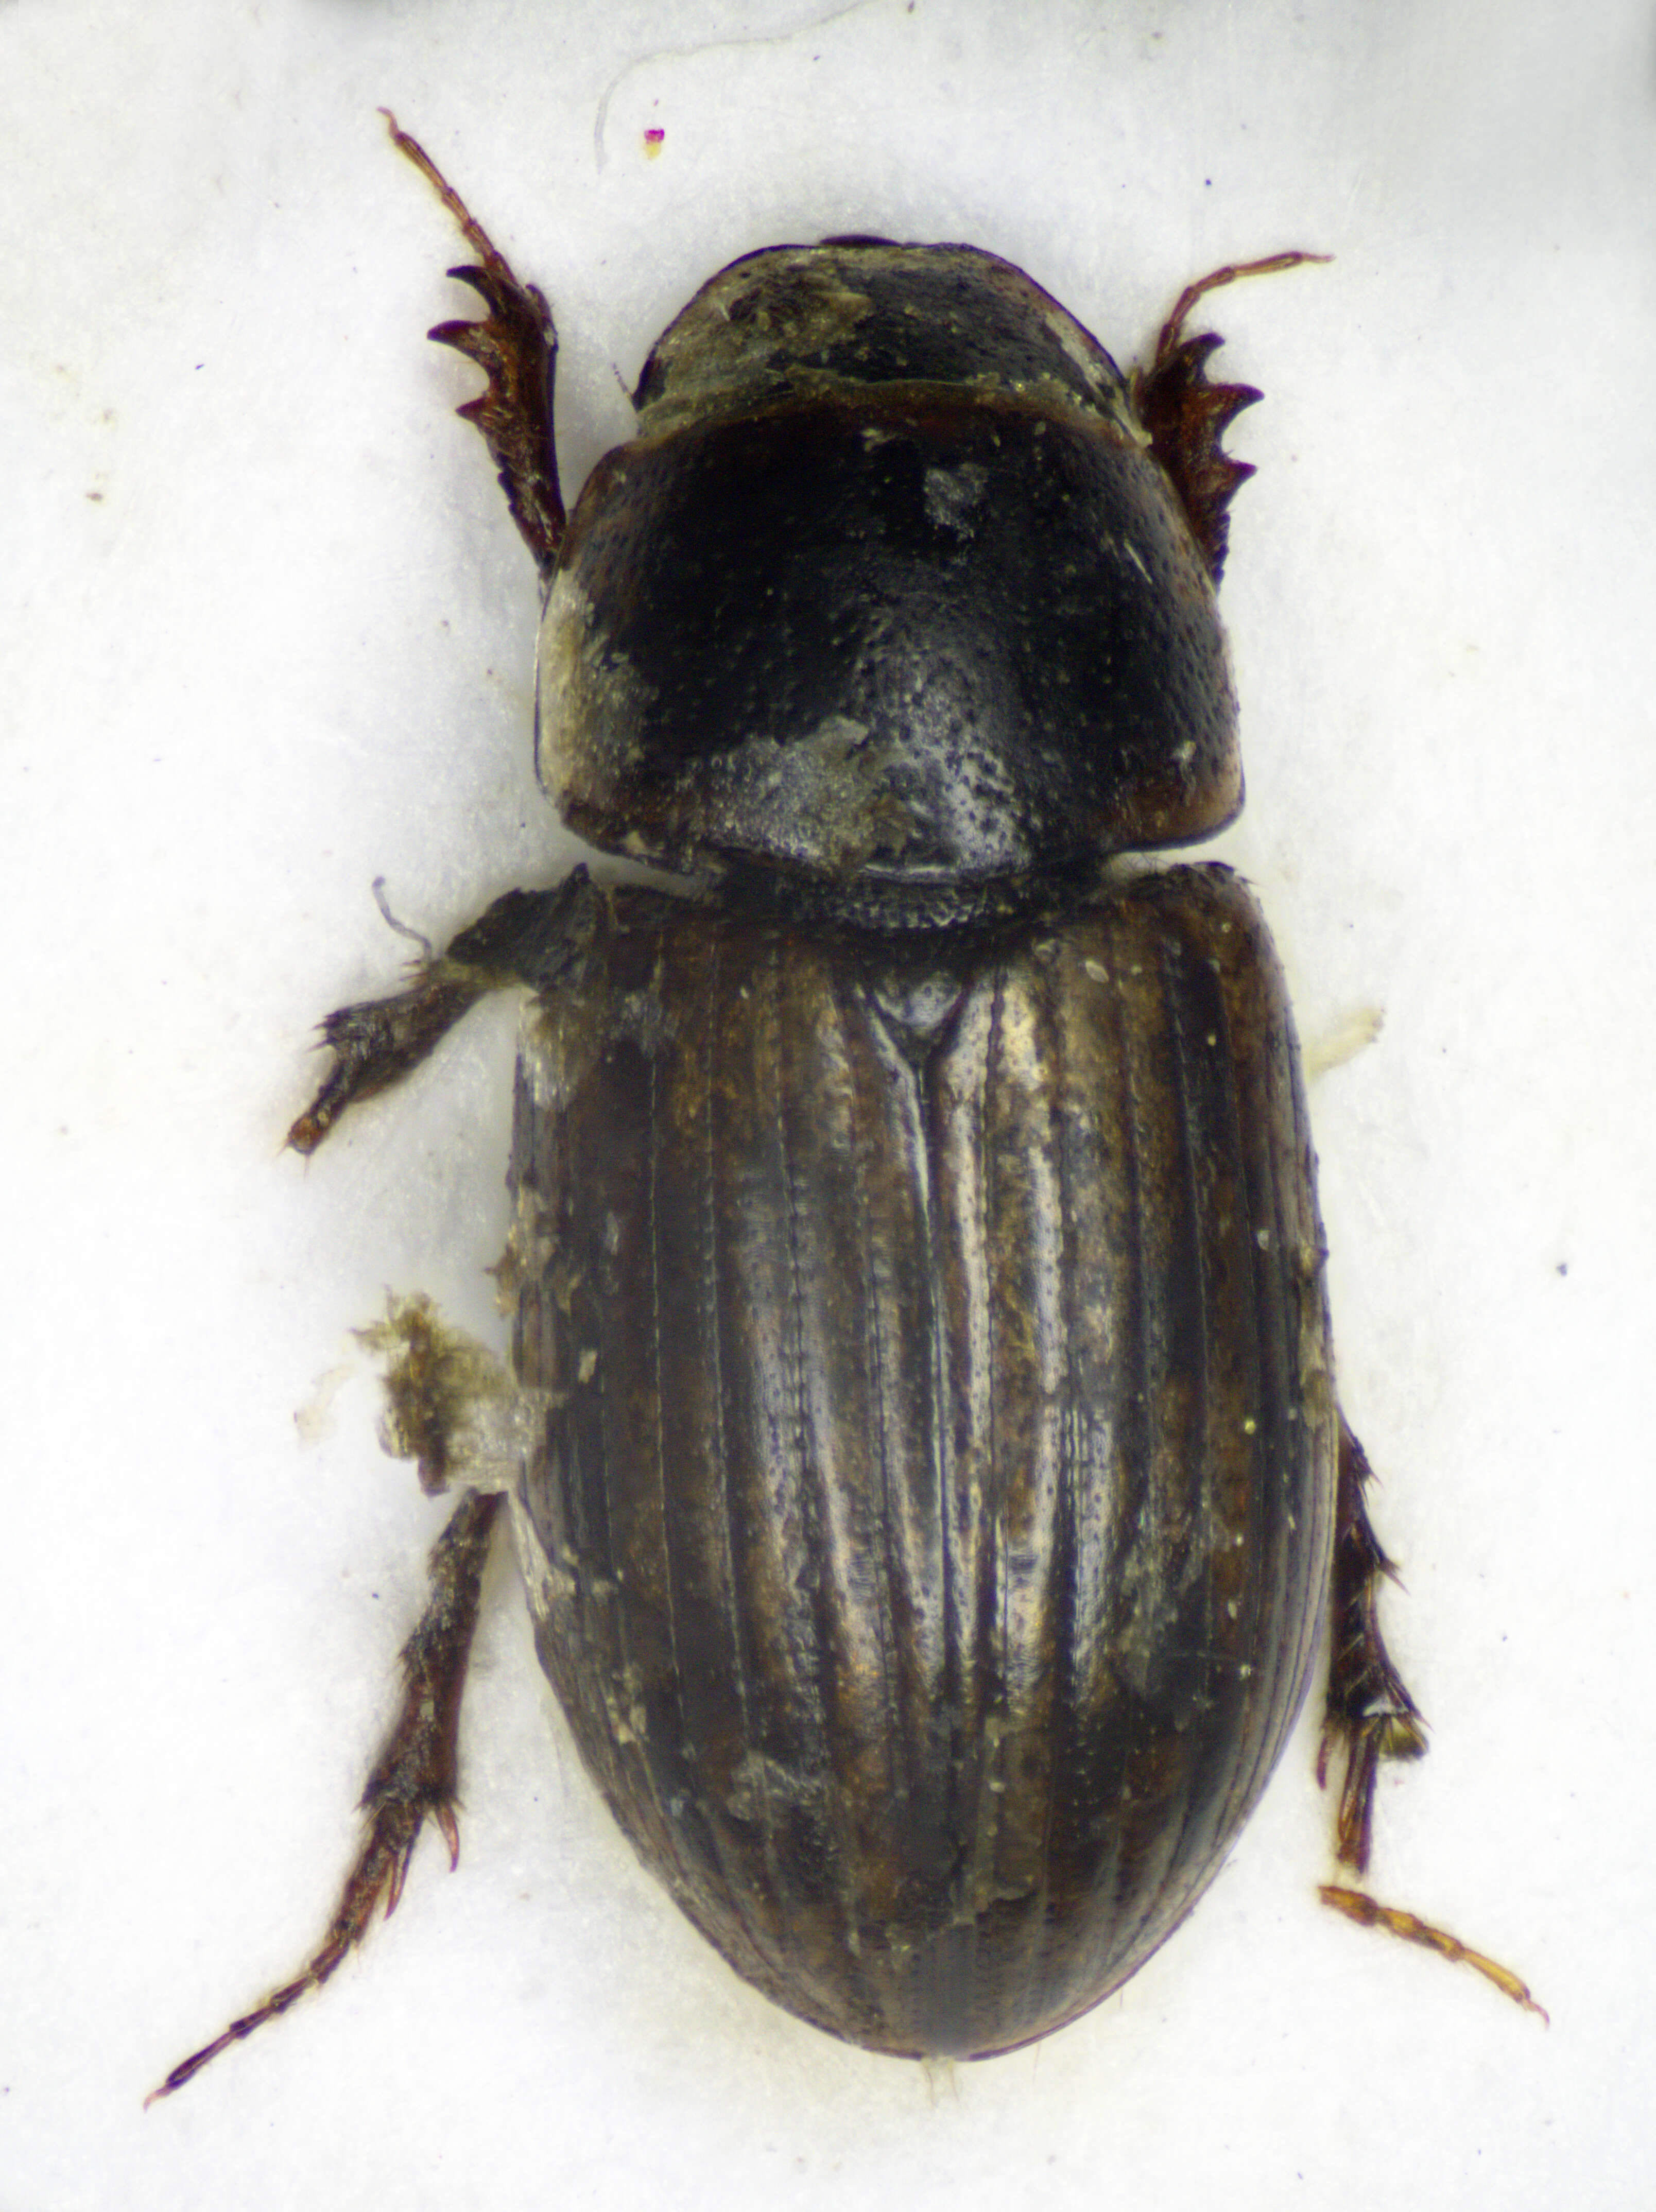 Image of Coleoptera